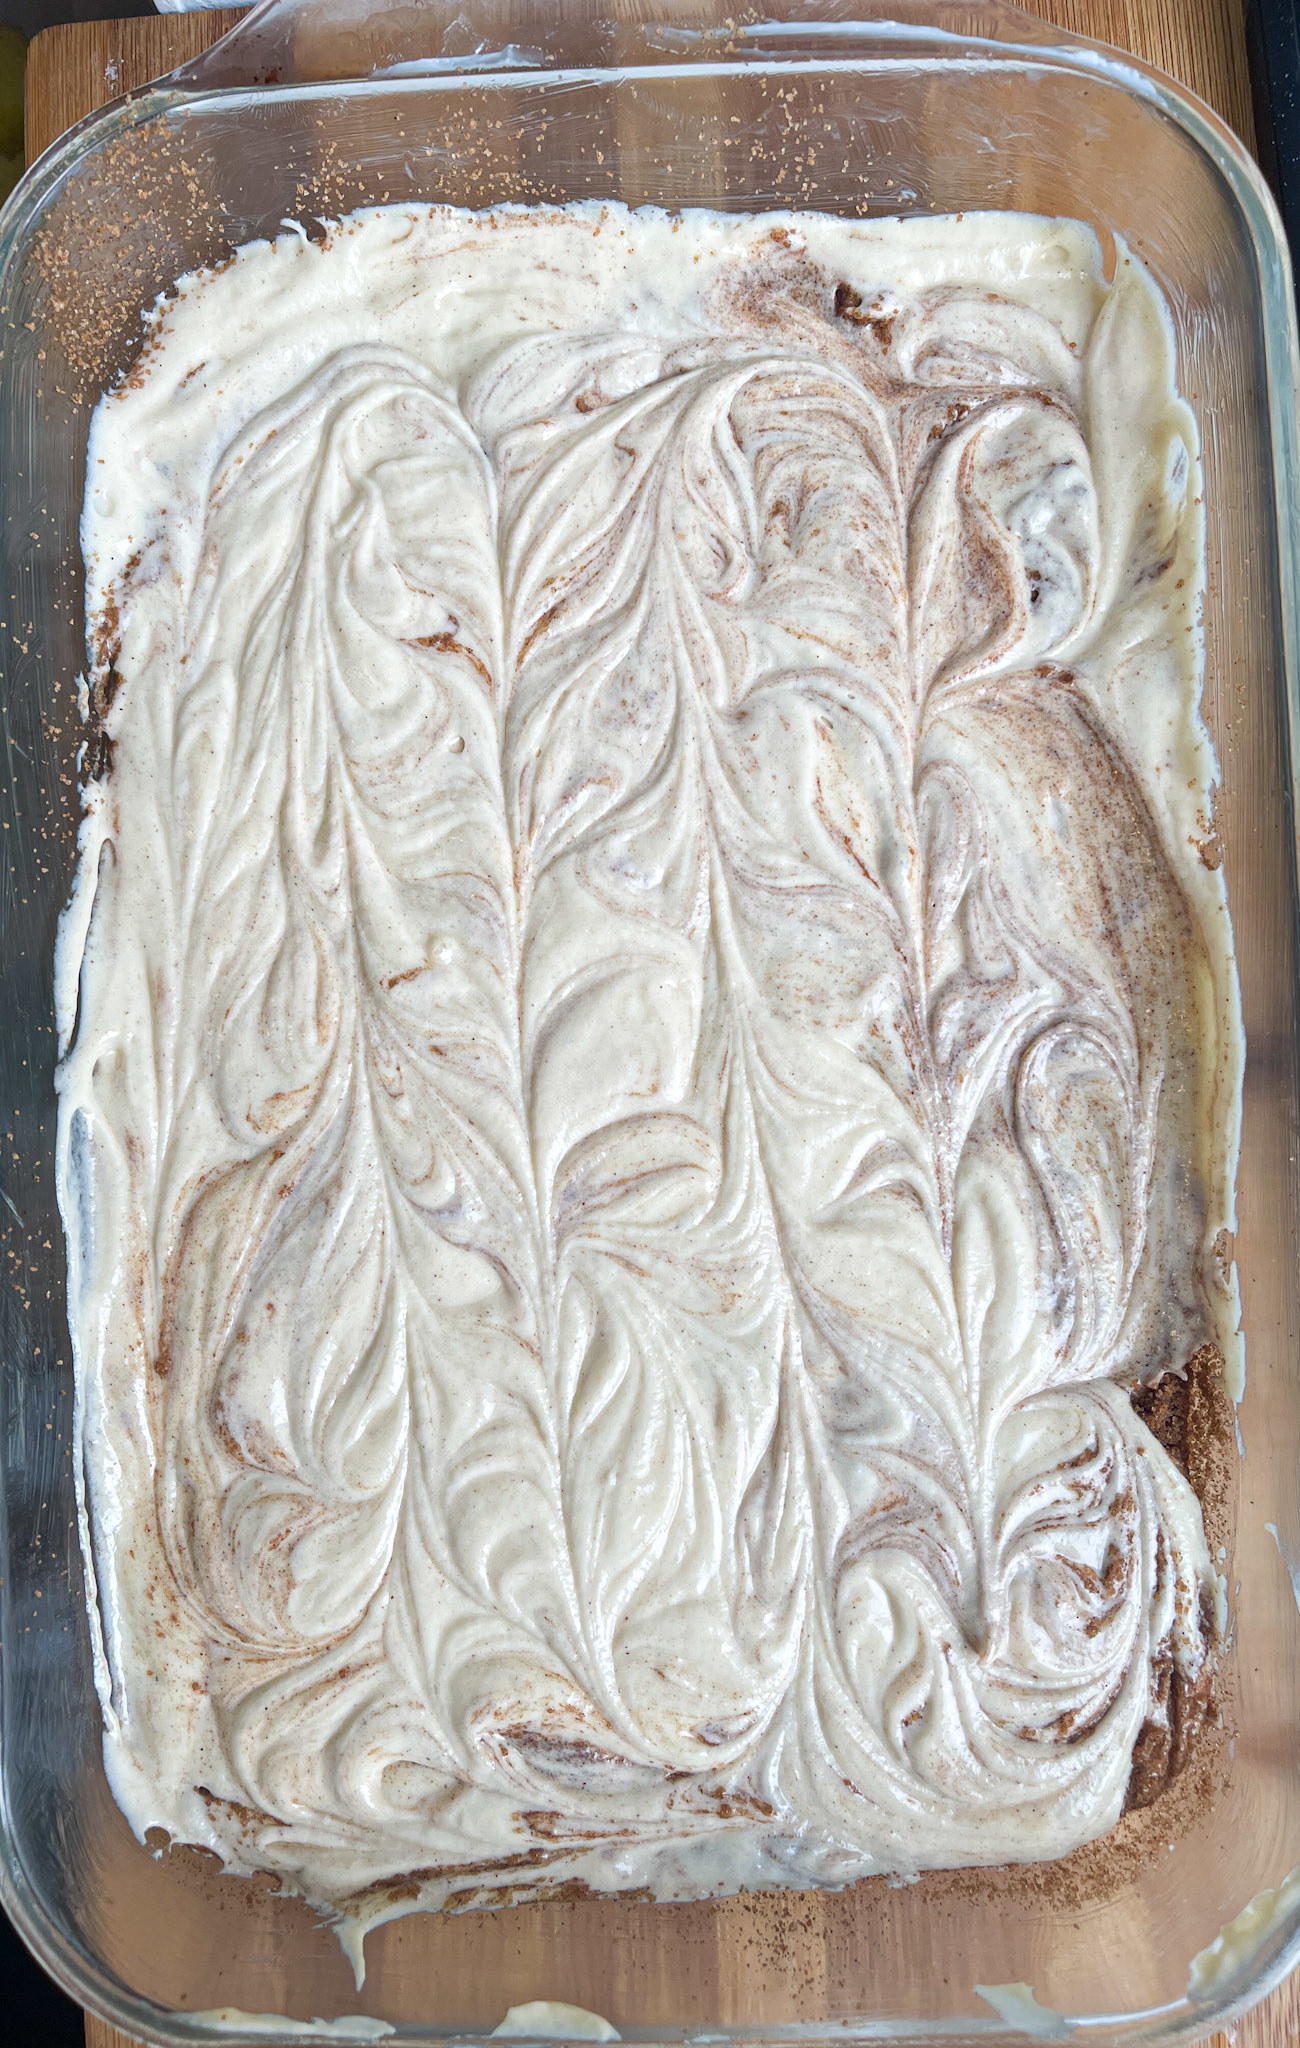 swirled top of cake batter before baking